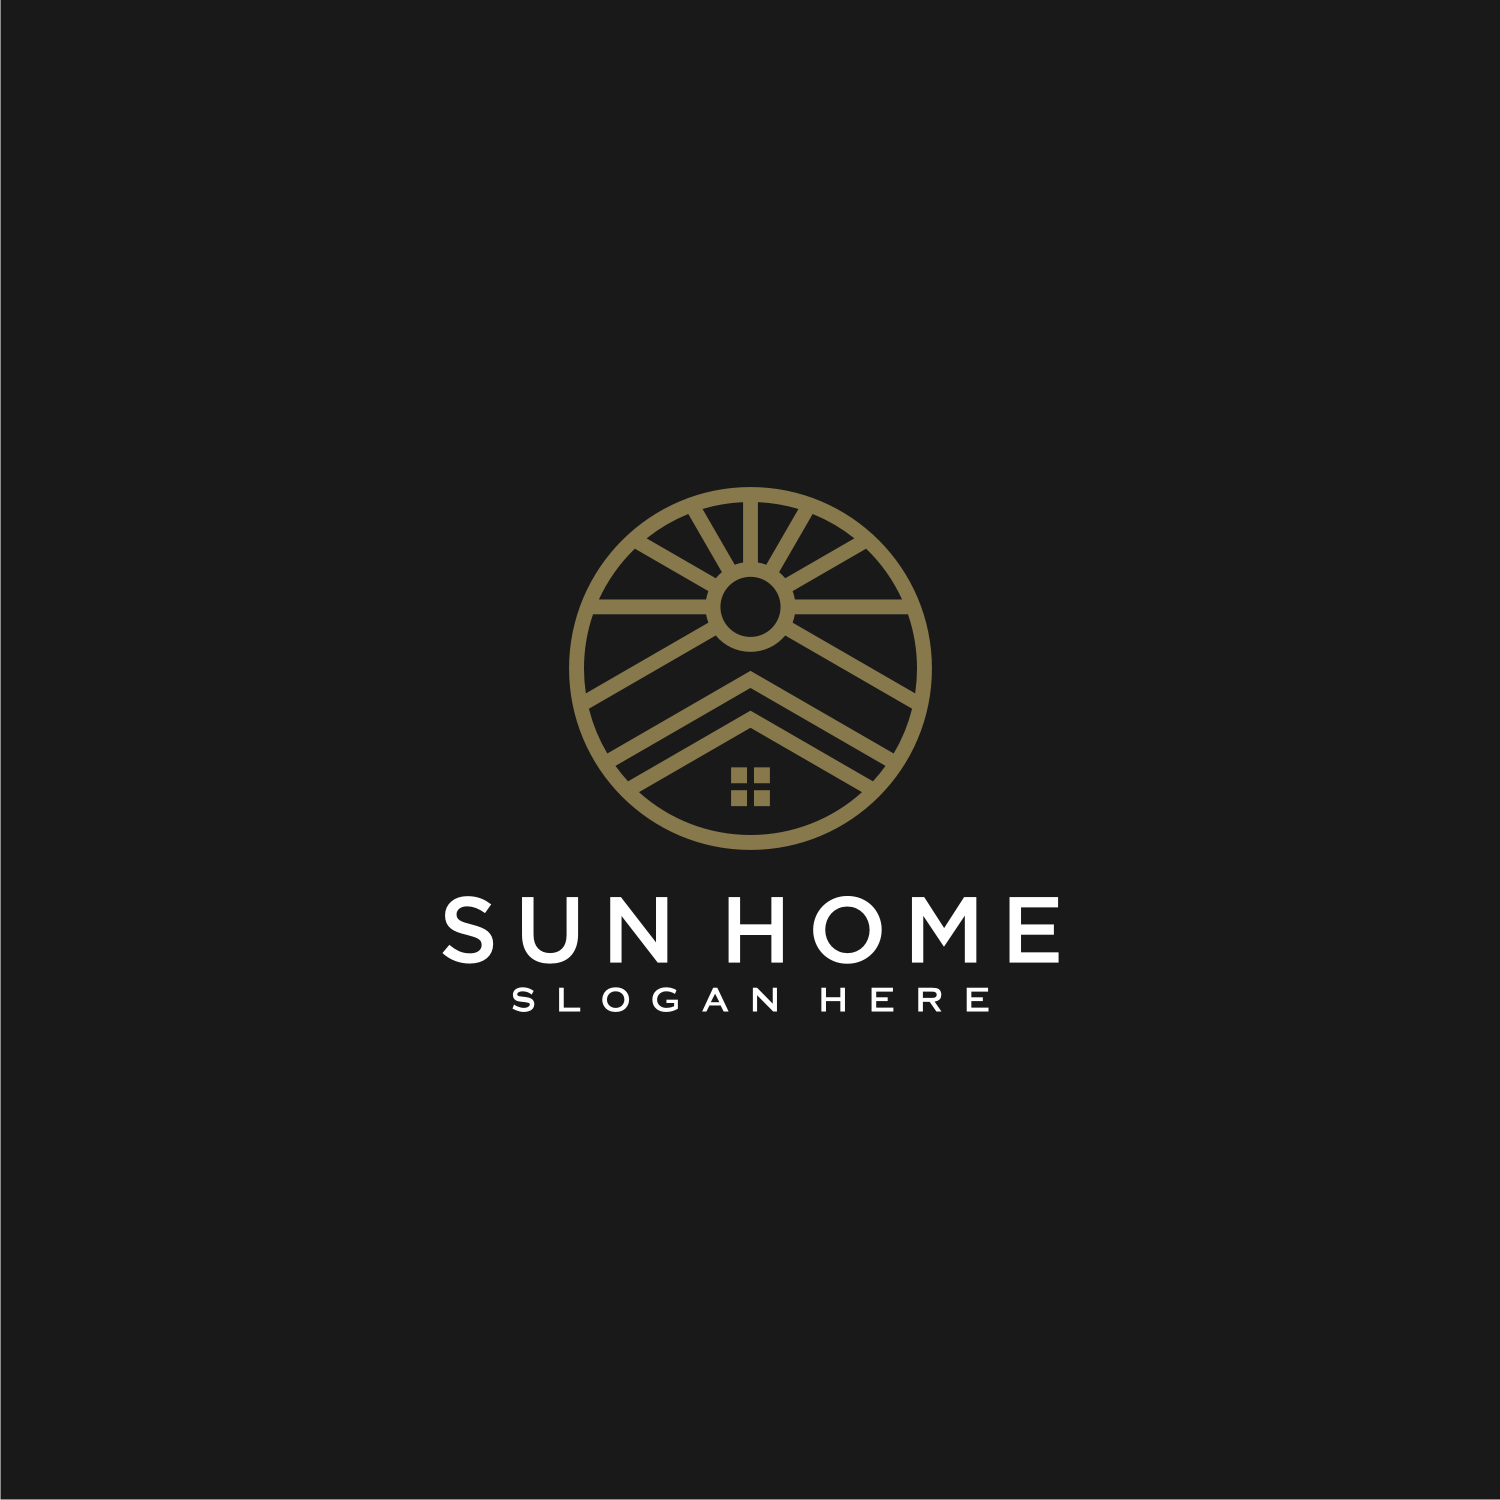 Minimalist Line Abstract Home with Sun Light Logo Design